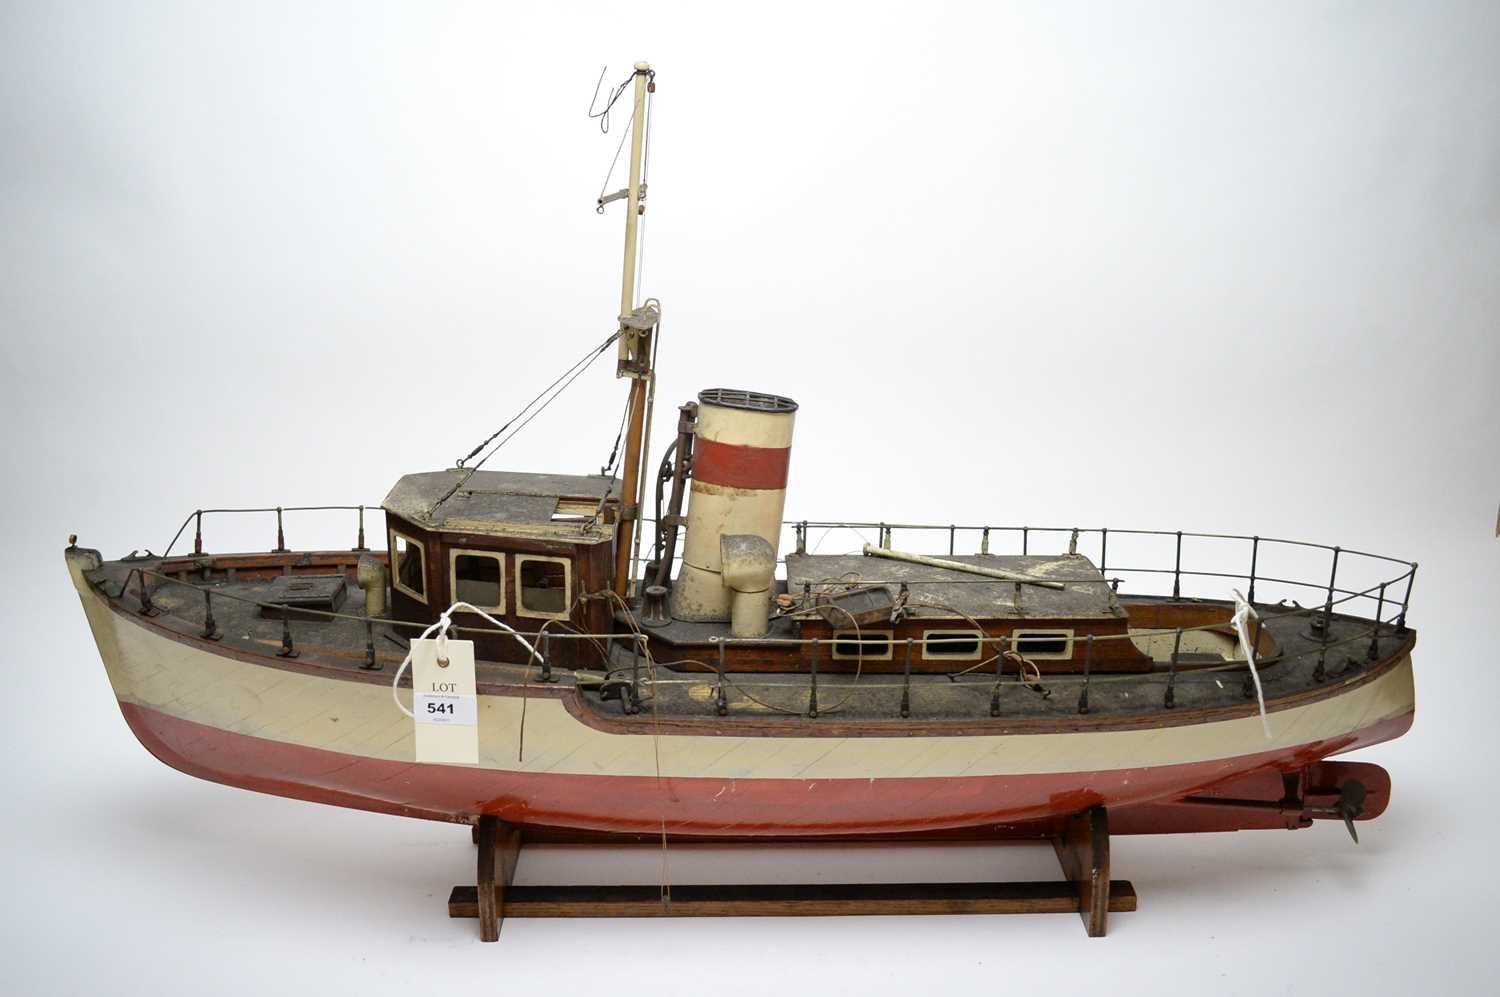 Lot 541 - A scratch built ship model